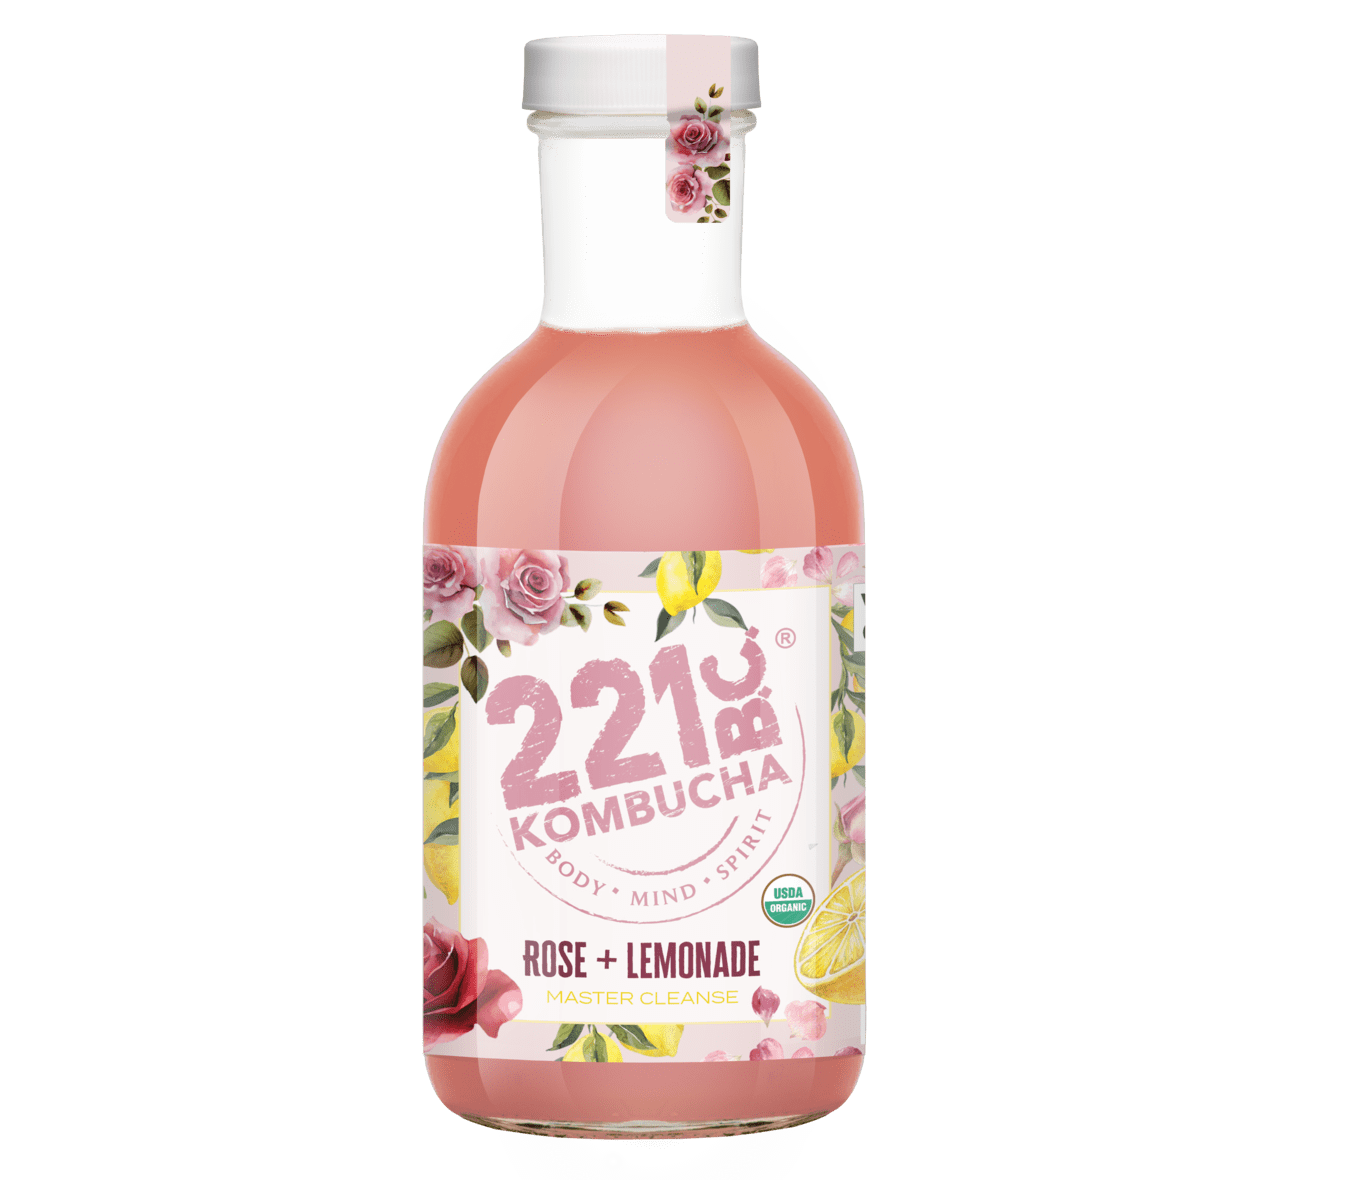 Rosé Lemonade Kombucha flavor bottle